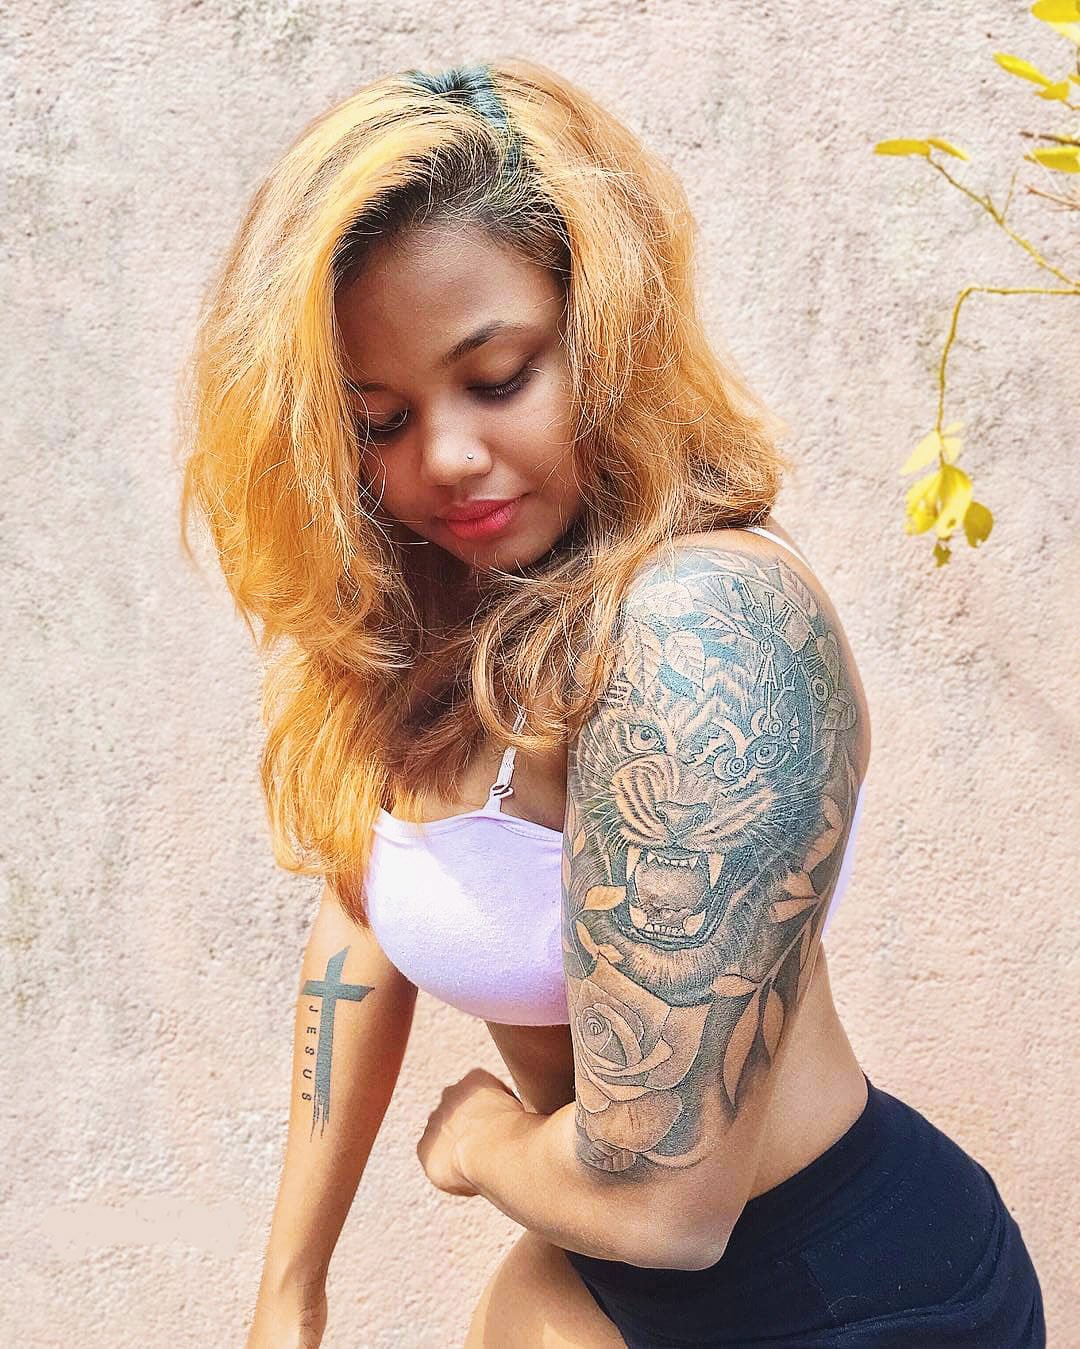 Lion Tattoos For Females - Shoulder Tattoos For Women